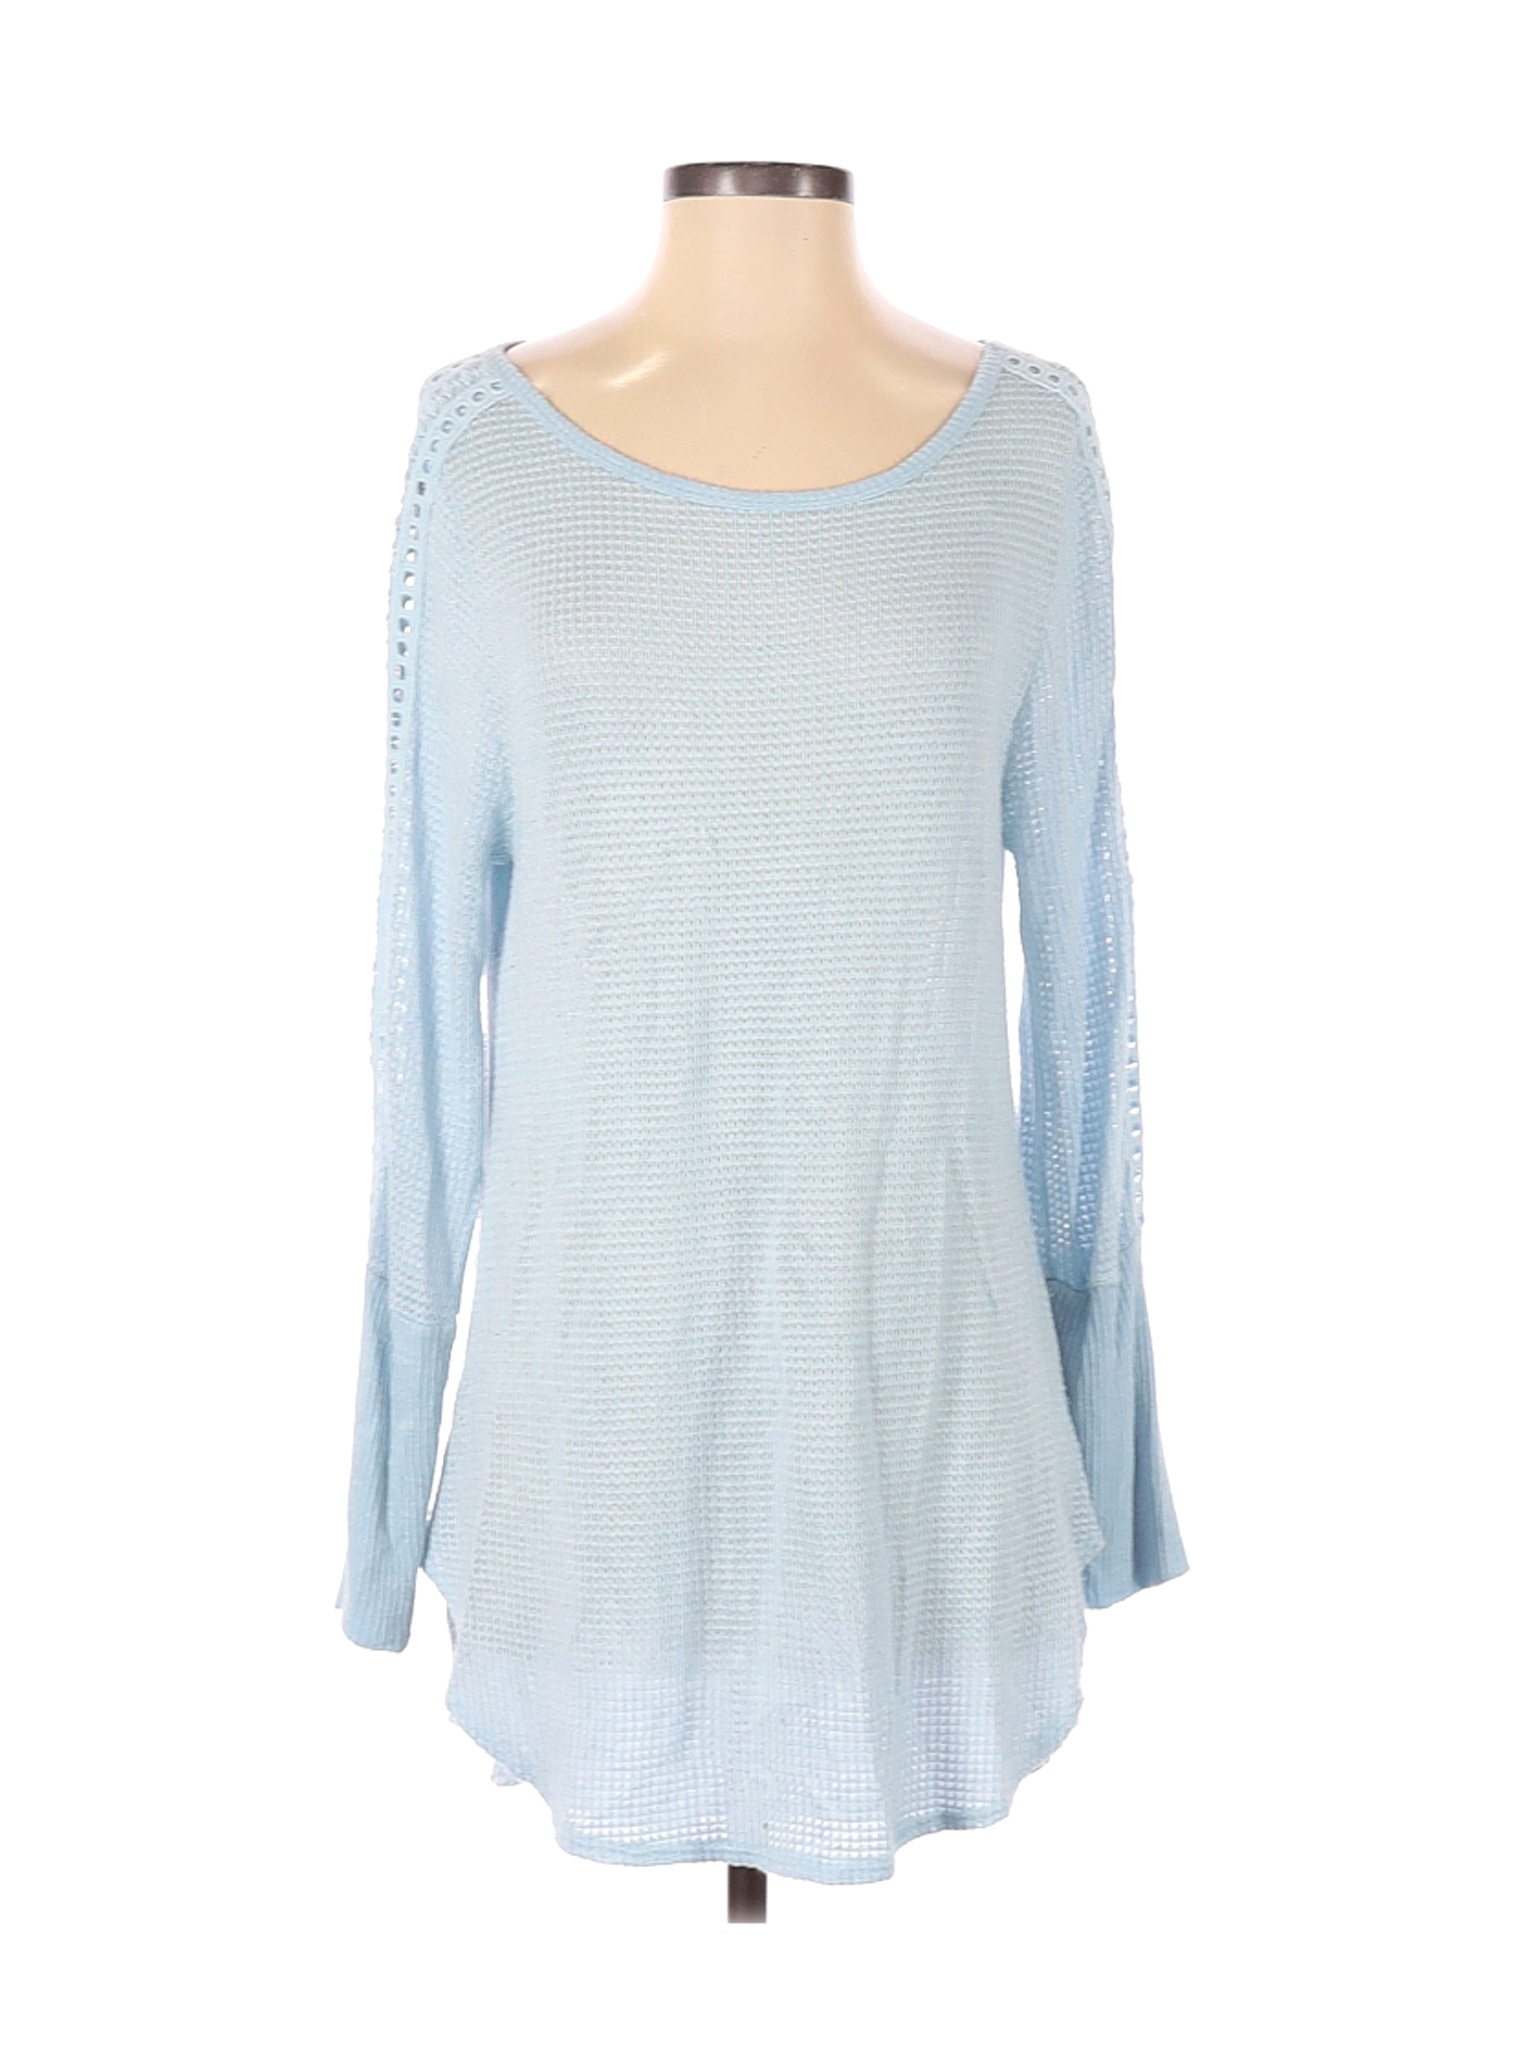 Soft Surroundings Women Blue Long Sleeve Top S | eBay